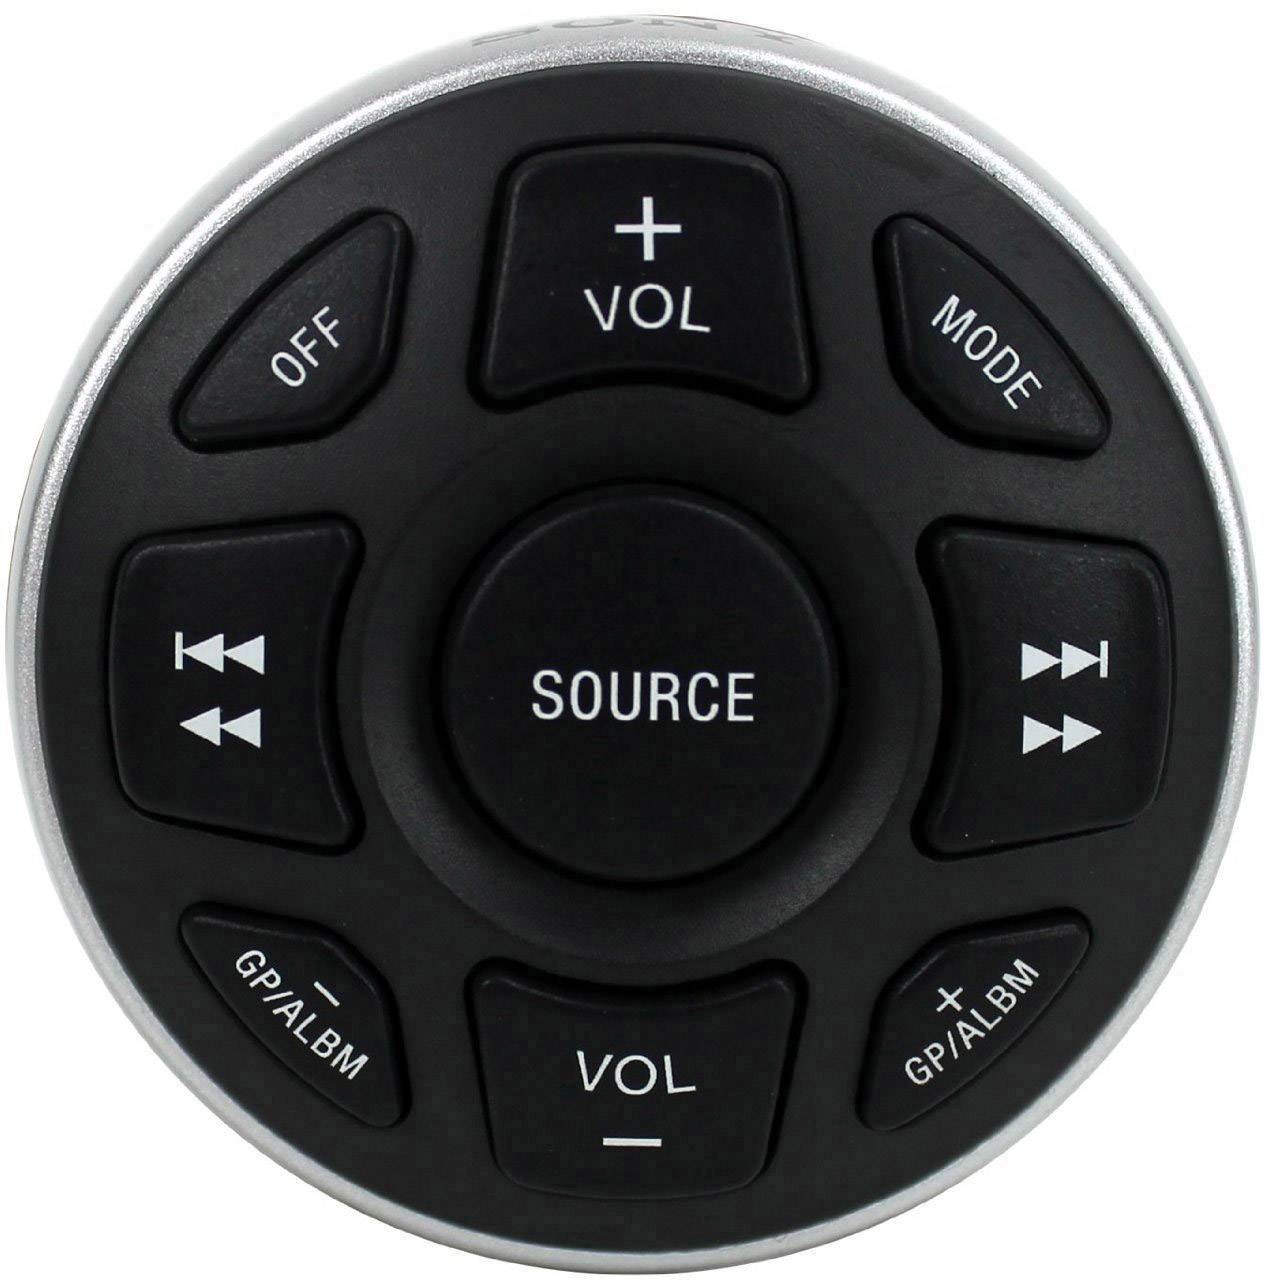 Sony RM-X11M Remote control Splashproof Conrad.com